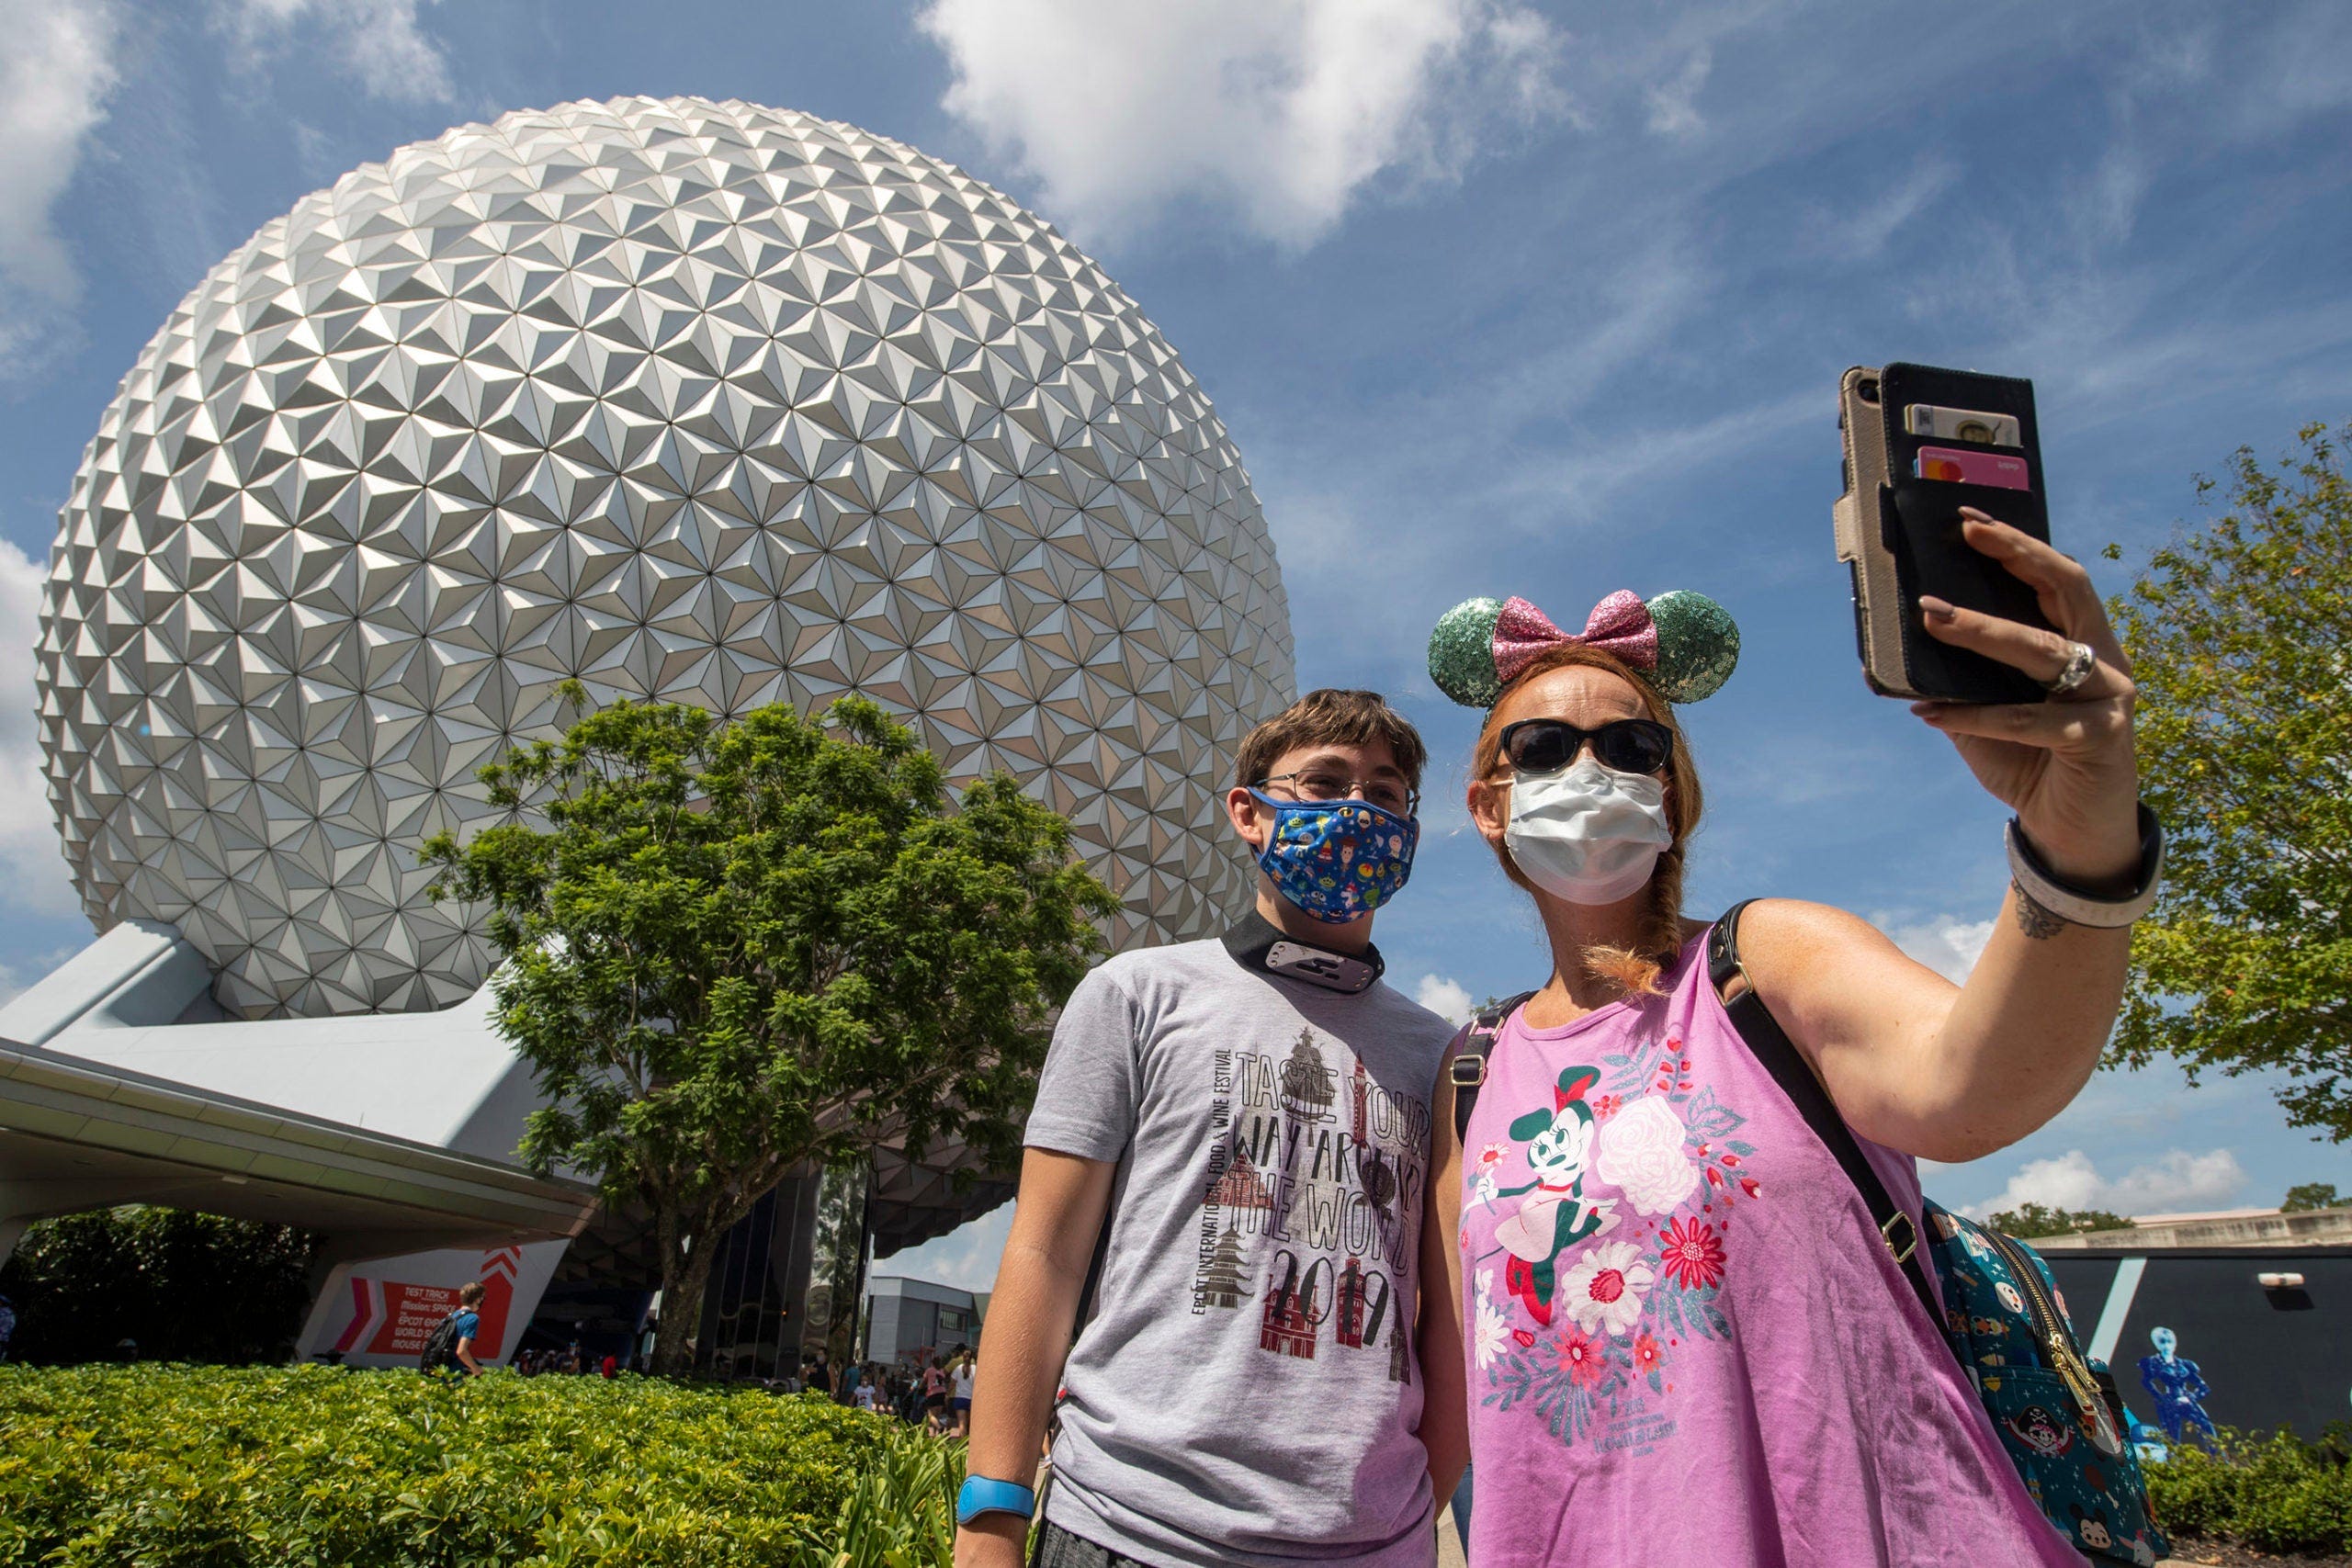 Walt Disney World Masks Required Indoors Starting July 30